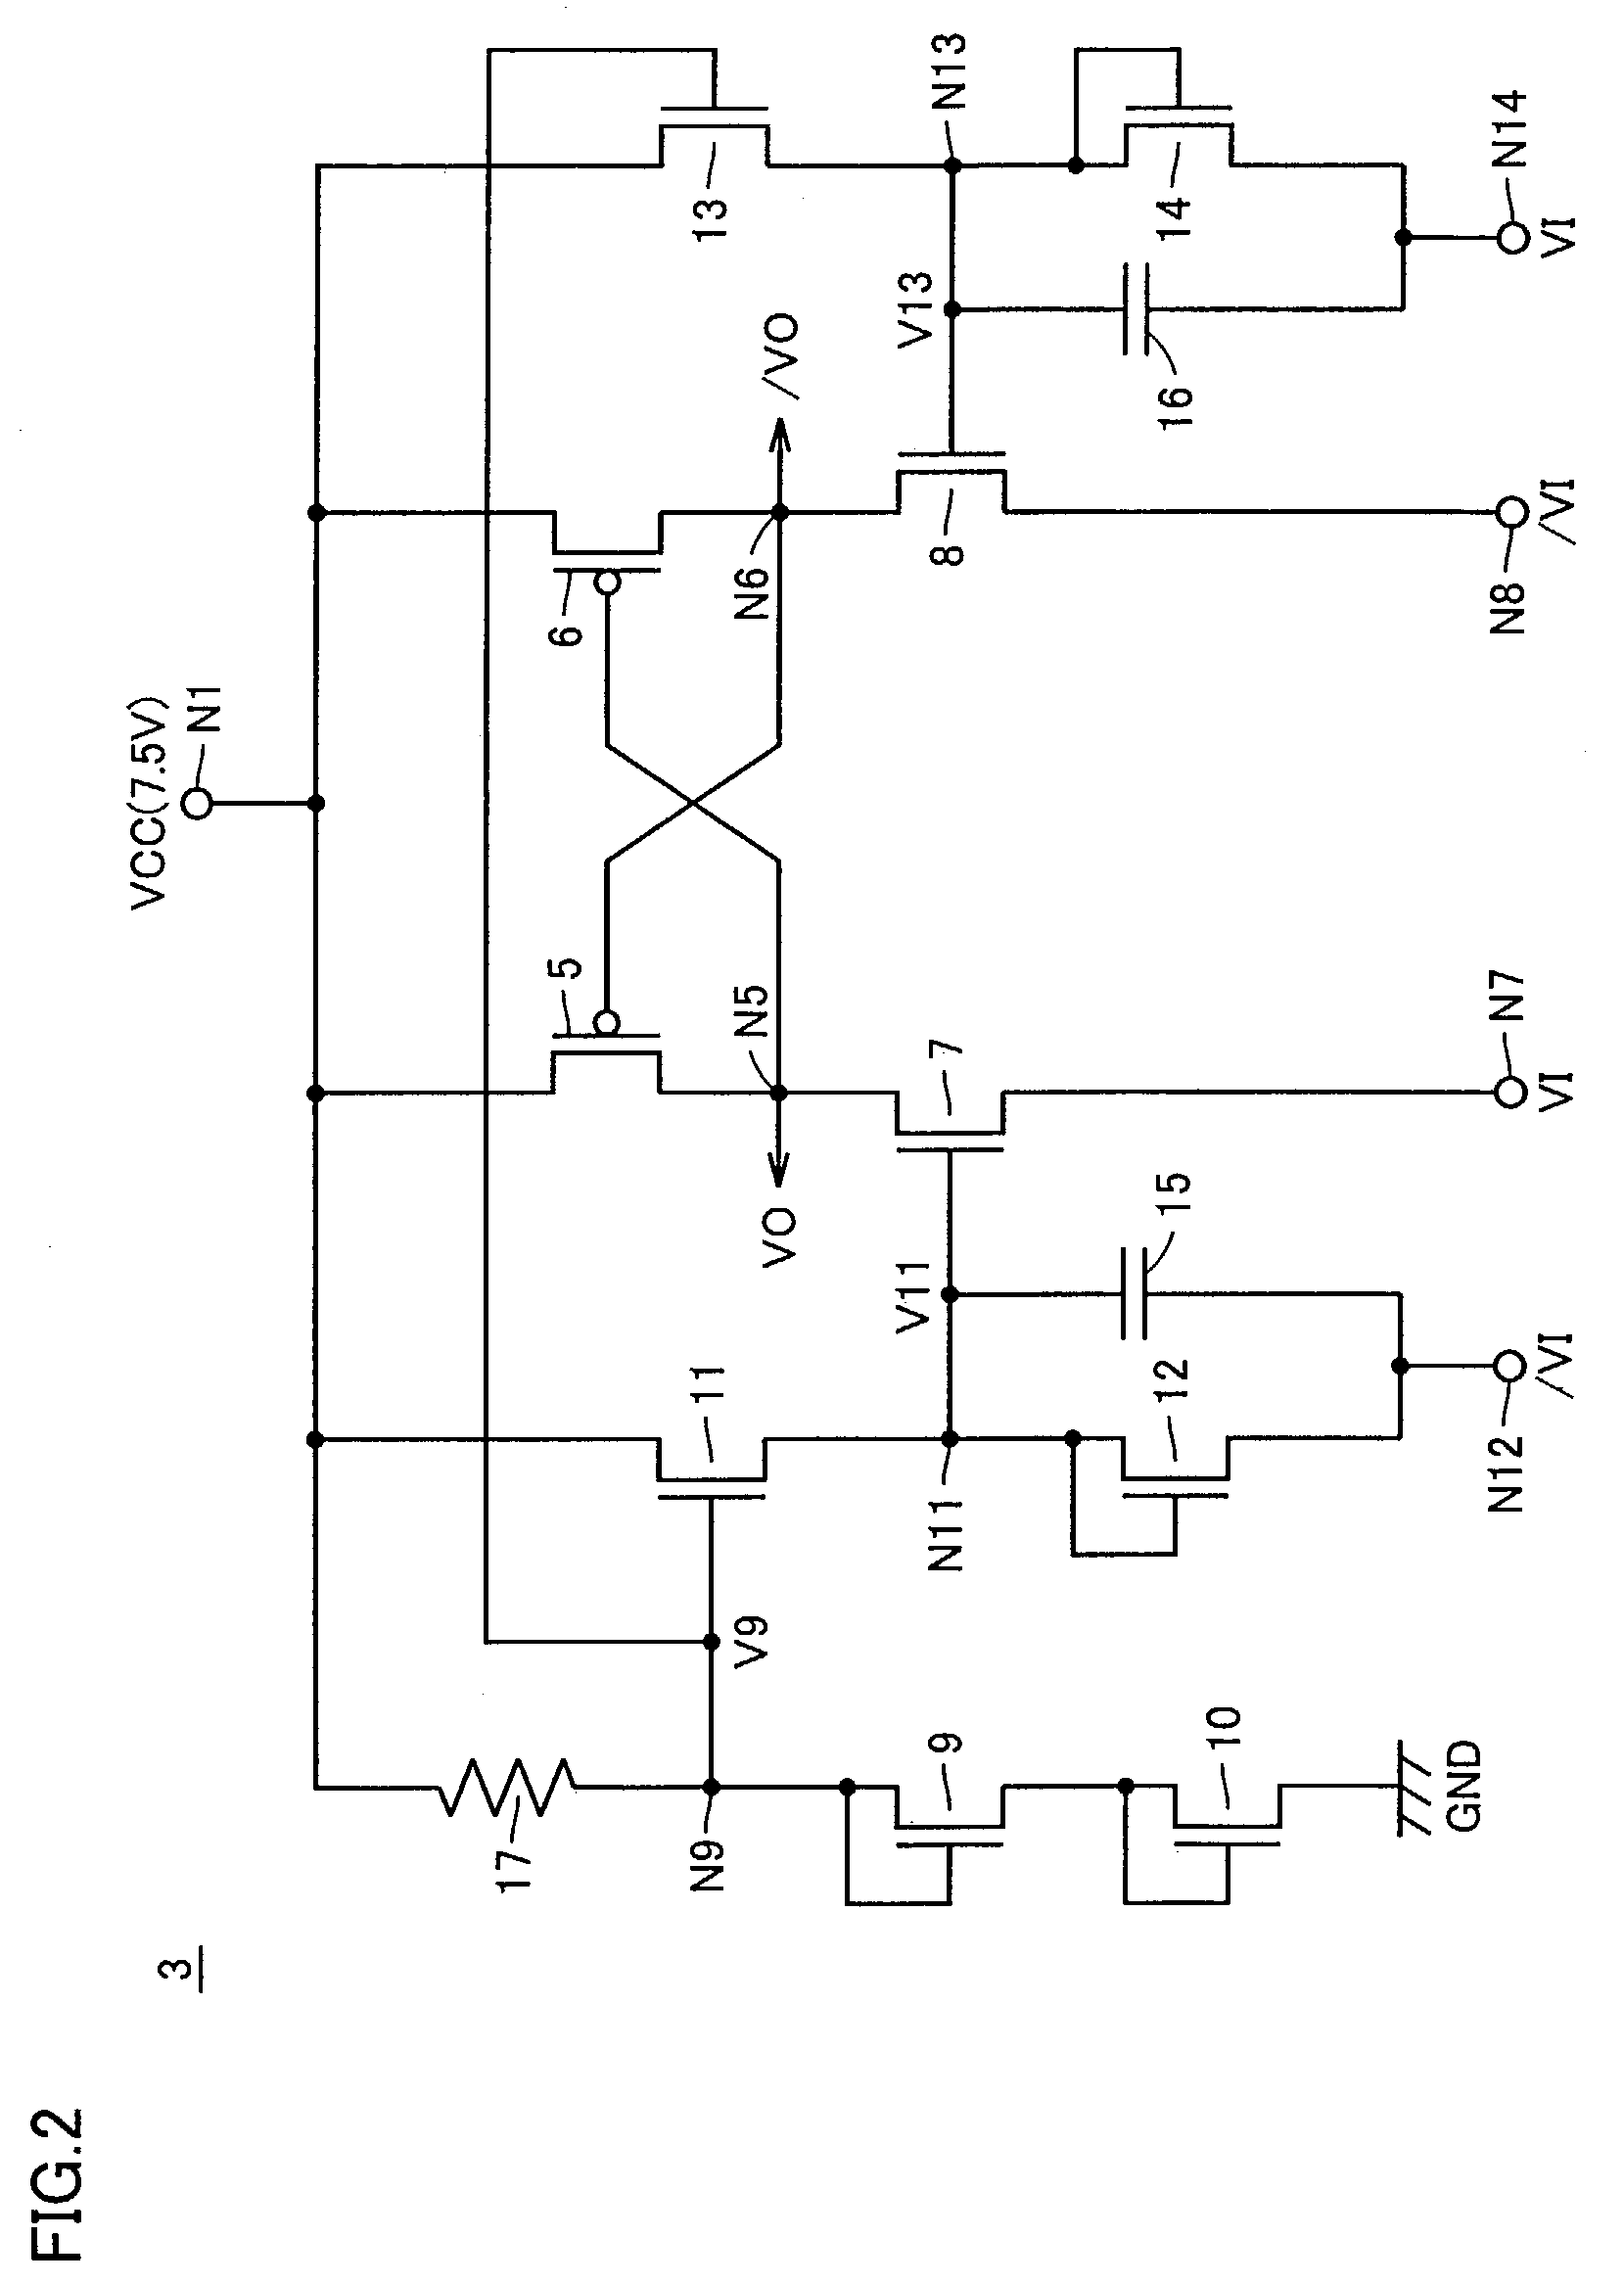 Amplitude conversion circuit for converting signal amplitude